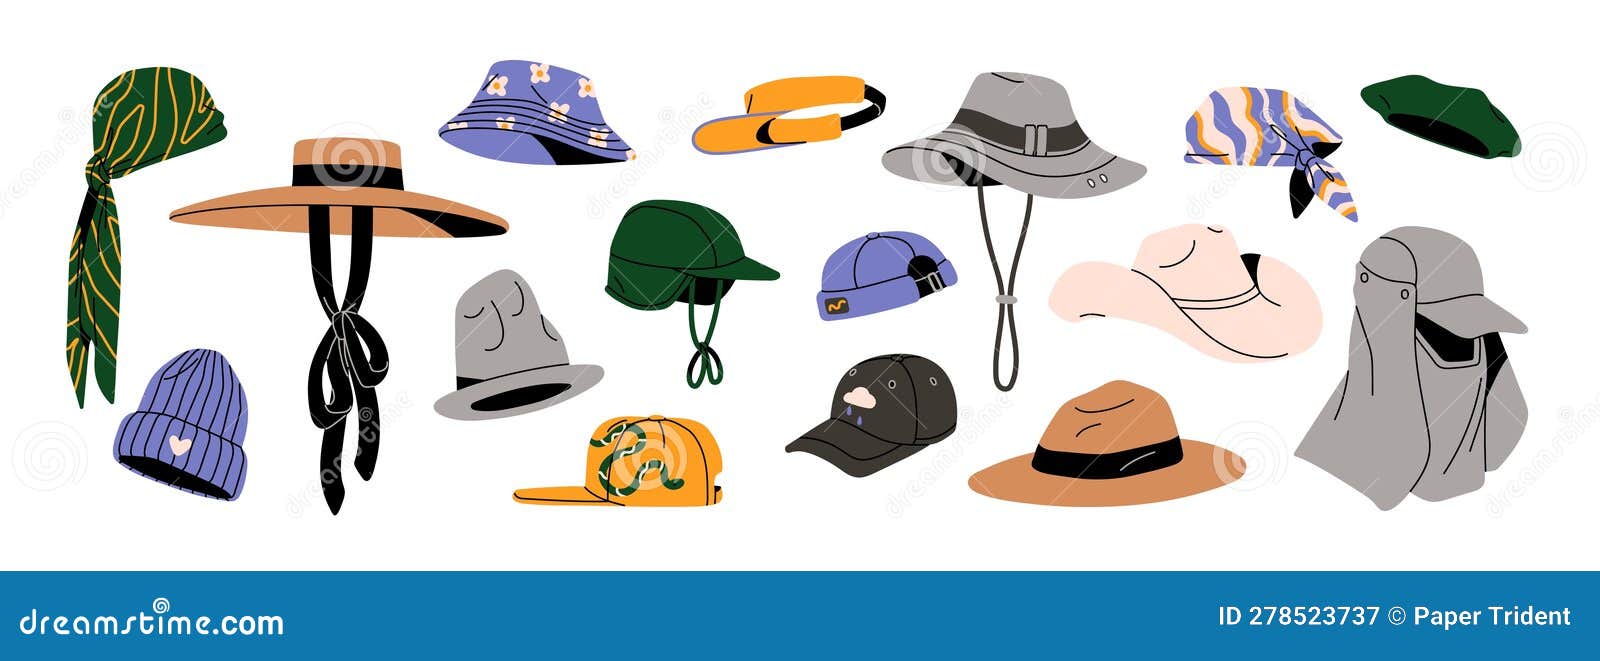 Headwear of Different Types Set. Caps, Summer Panama, Visor, Beach